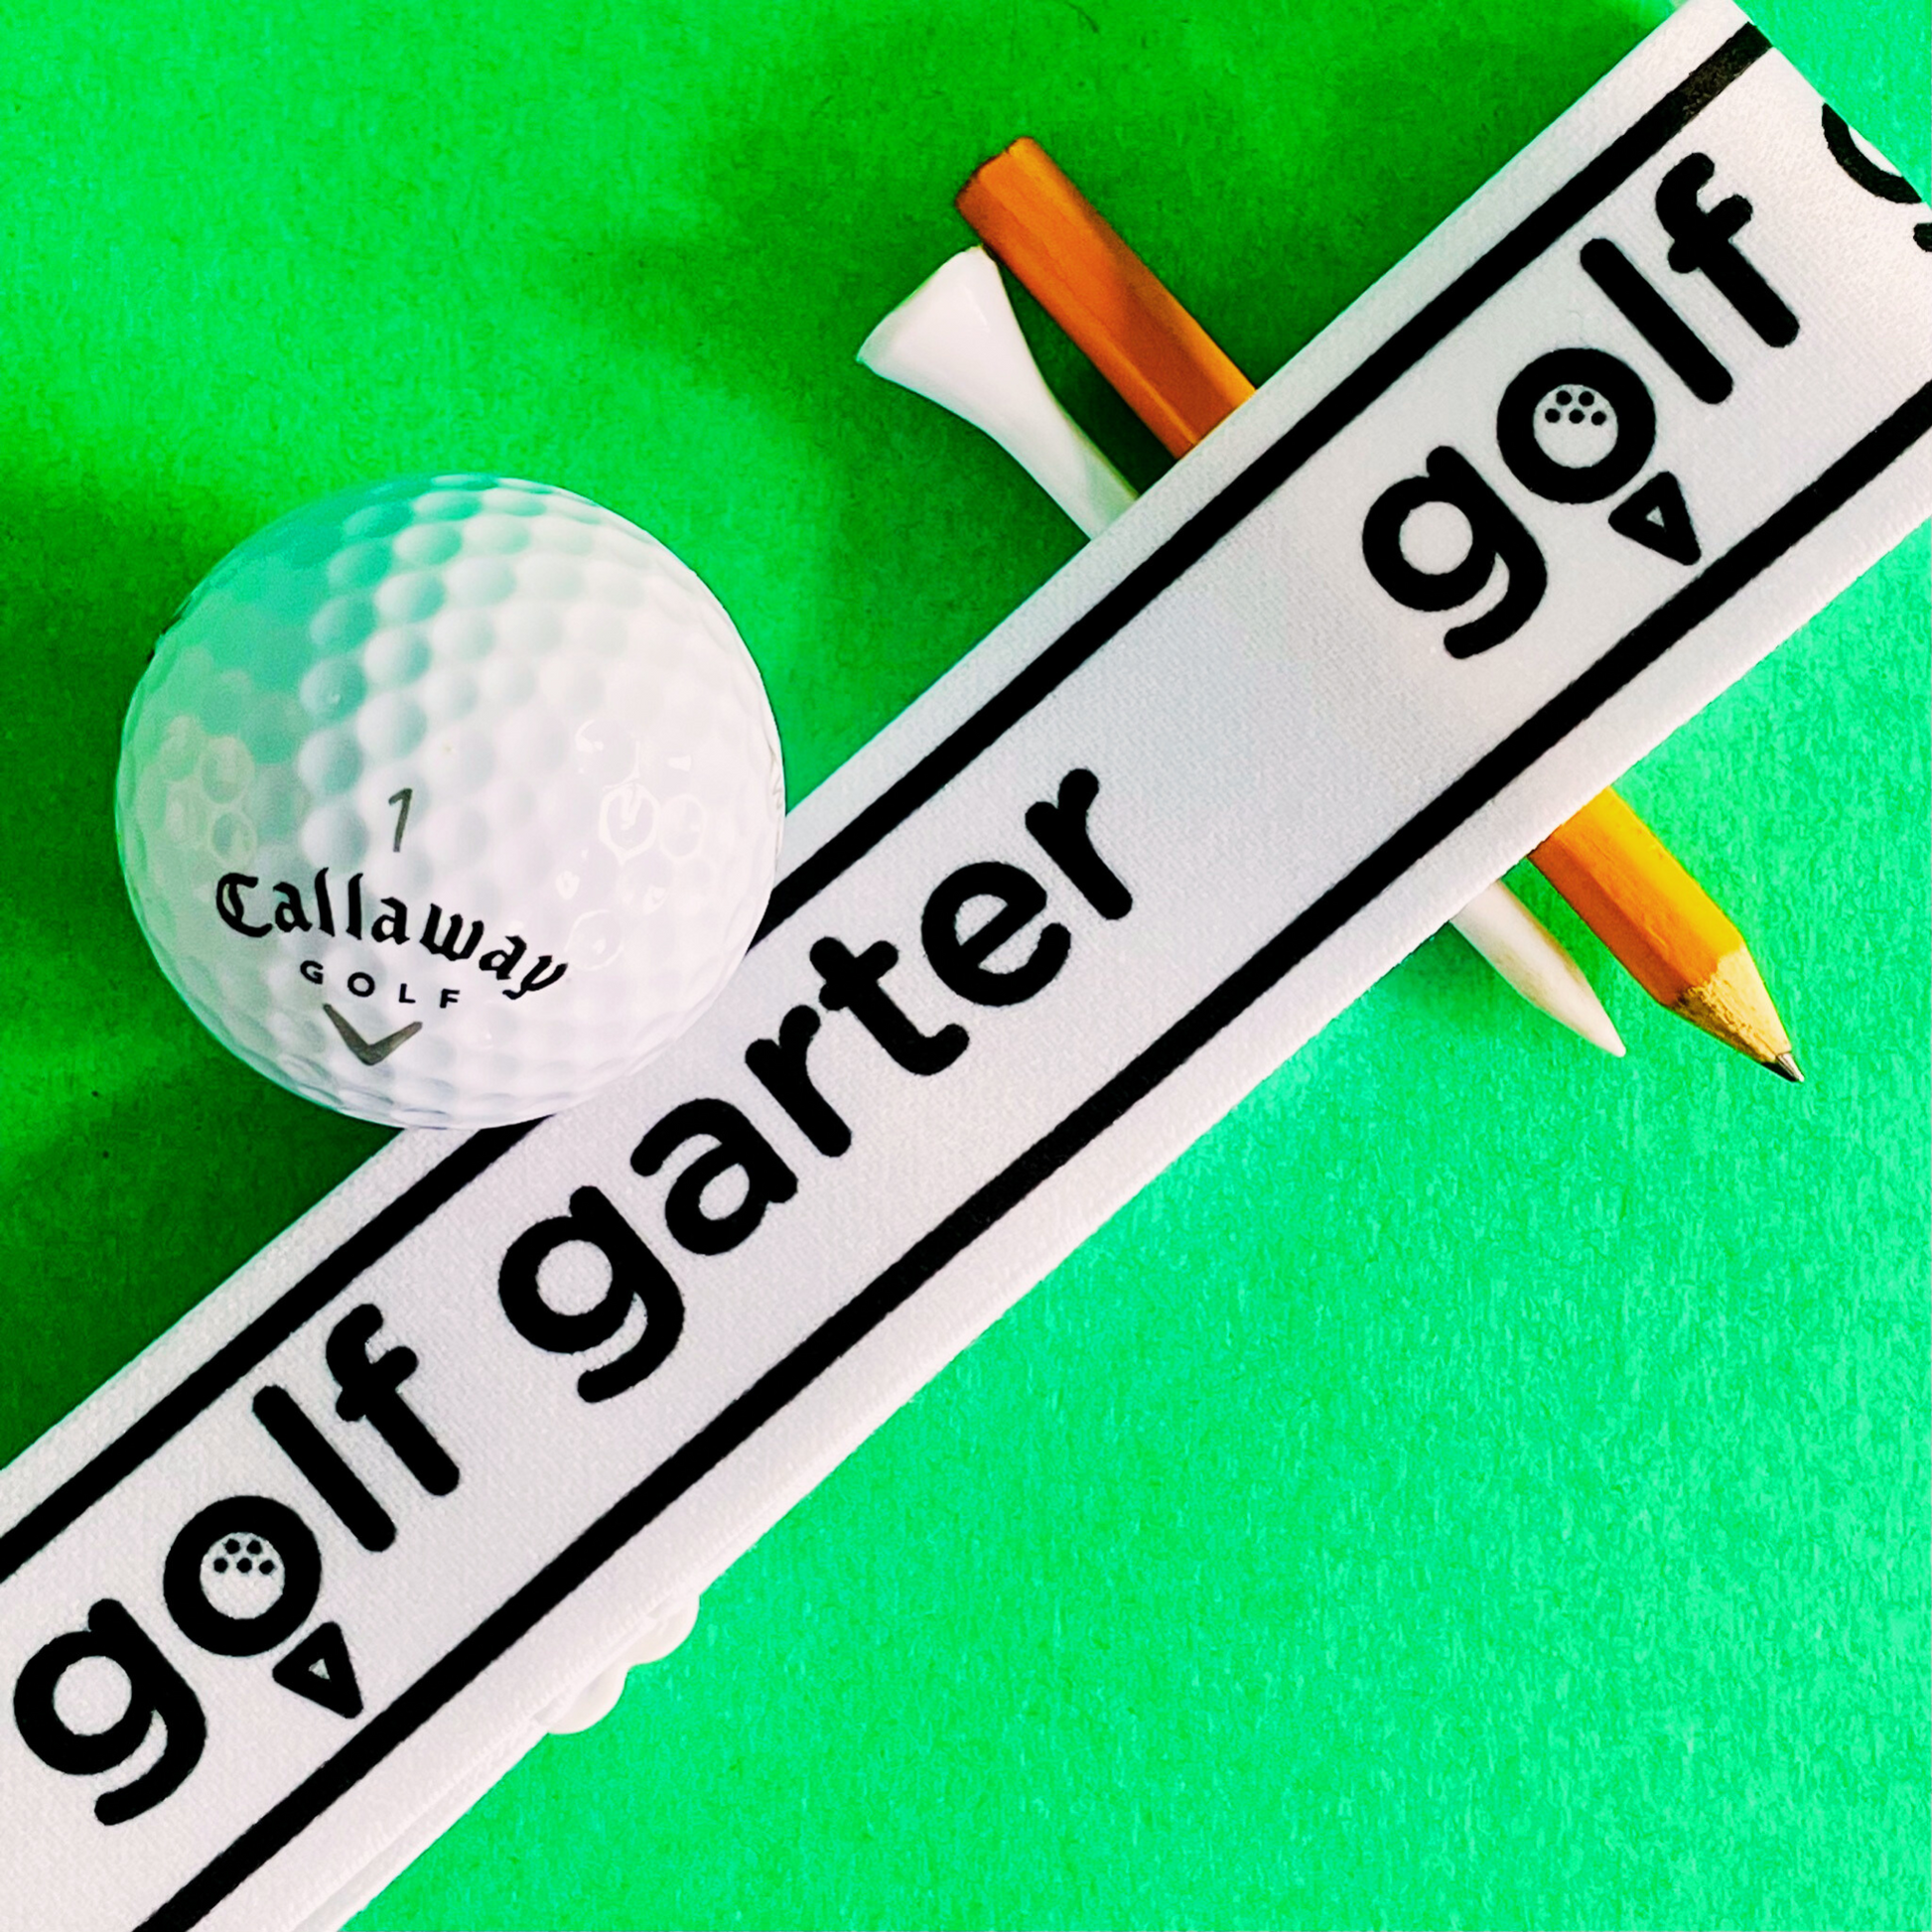 Pin on Golf Gear